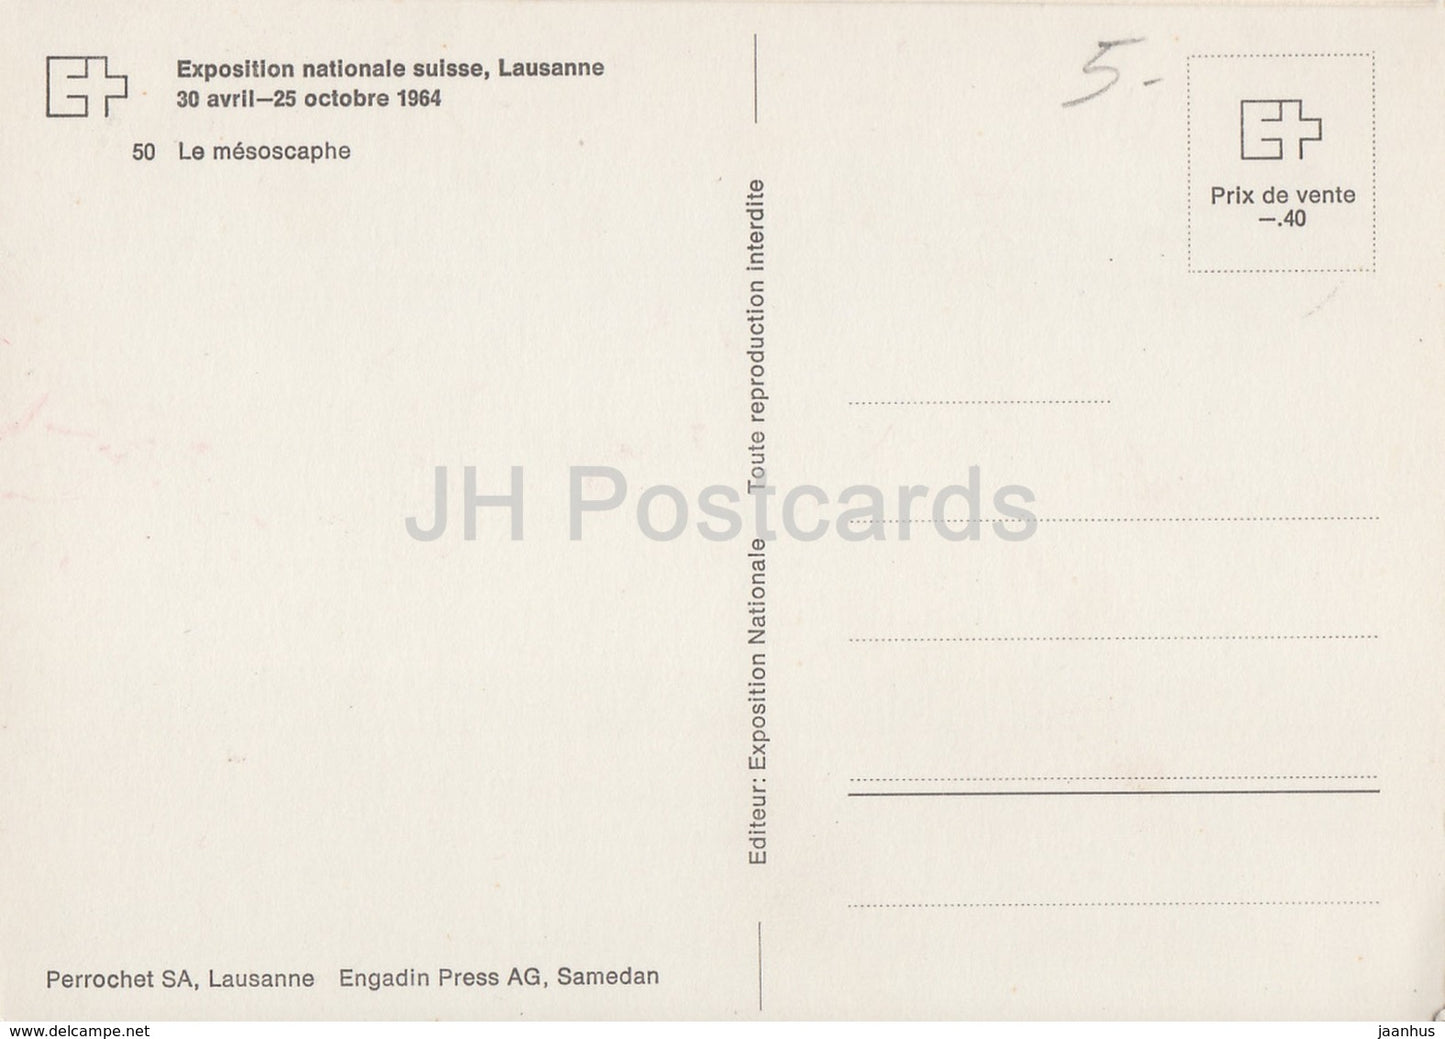 Lausanne - Exposition Nationale Suisse 1964 - Le mesoscaphe - submarine - Switzerland - unused